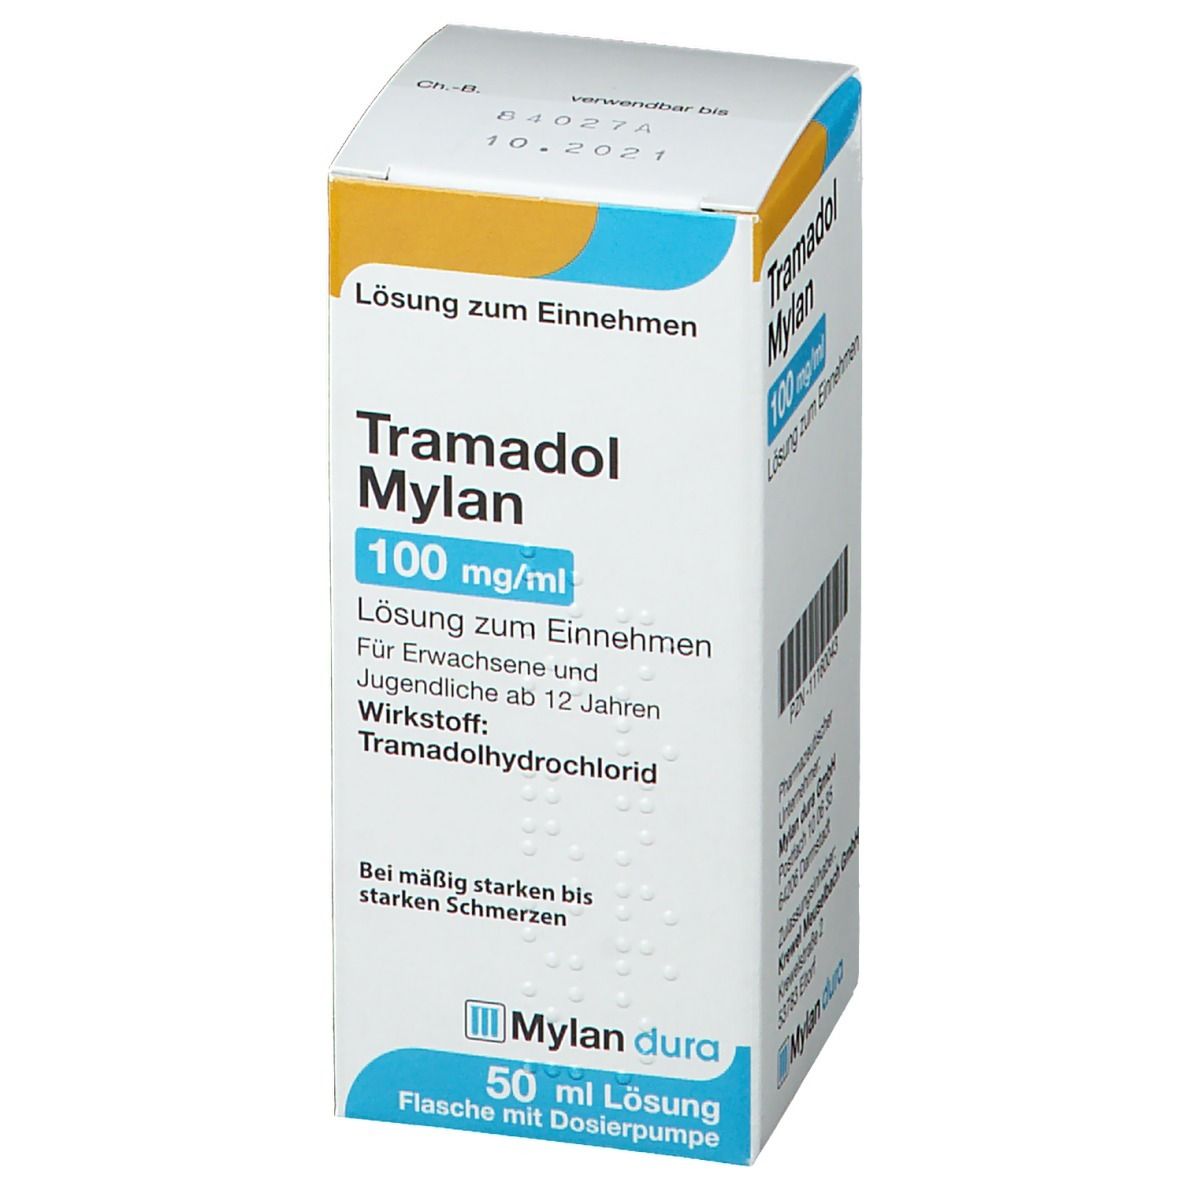 Tramadol Mylan 100 mg/ml